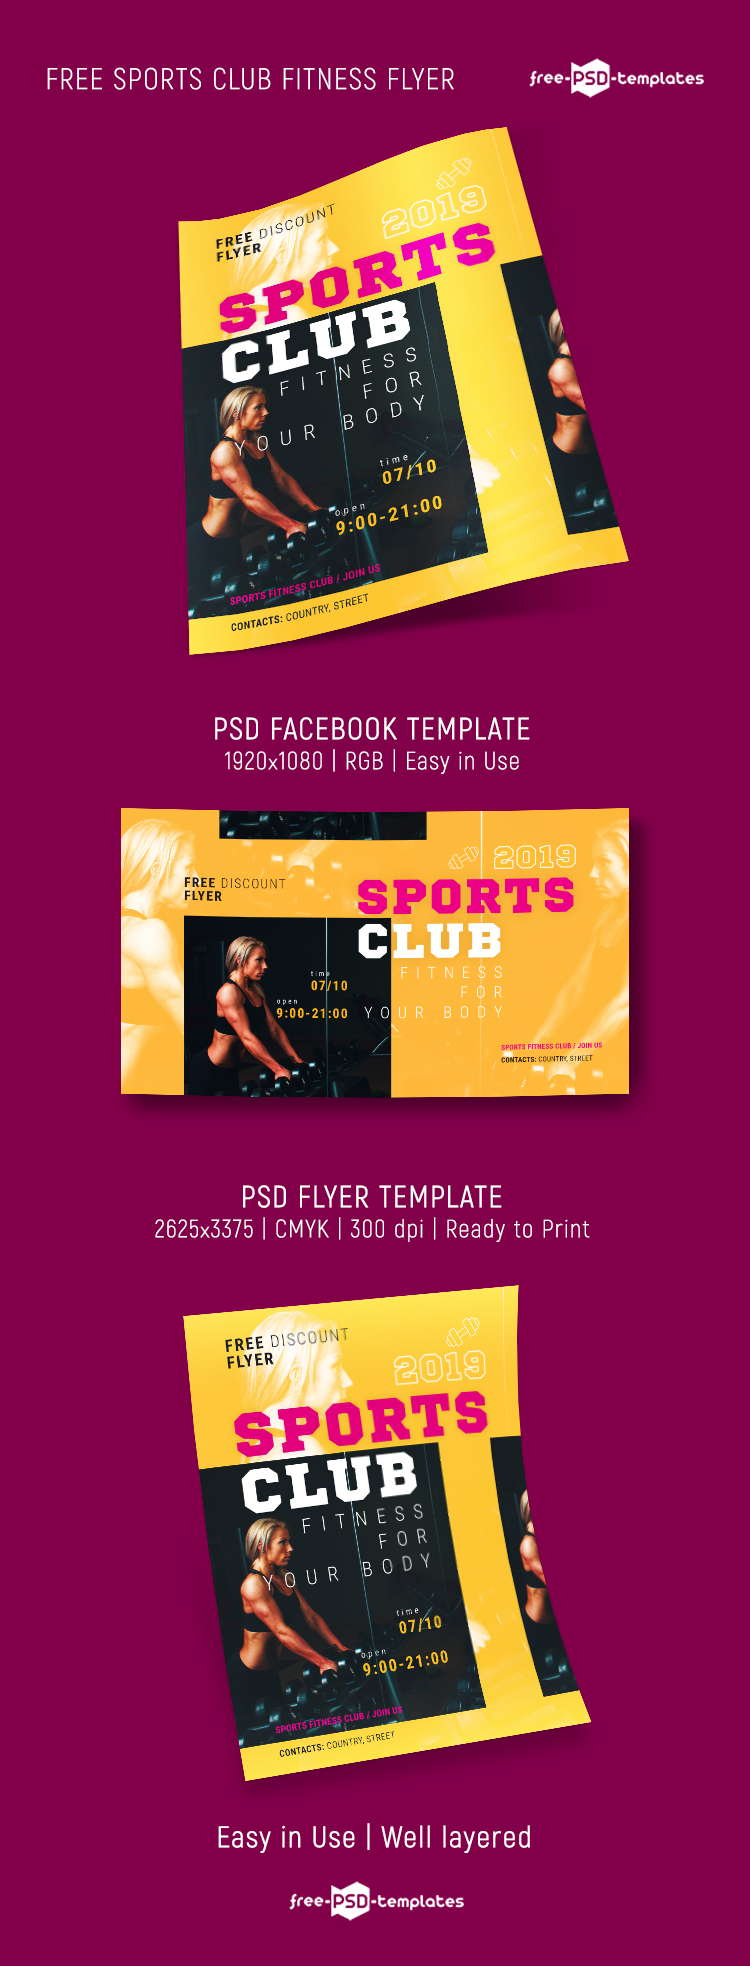 Free Sports Club Fitness Flyer Free Psd Templates